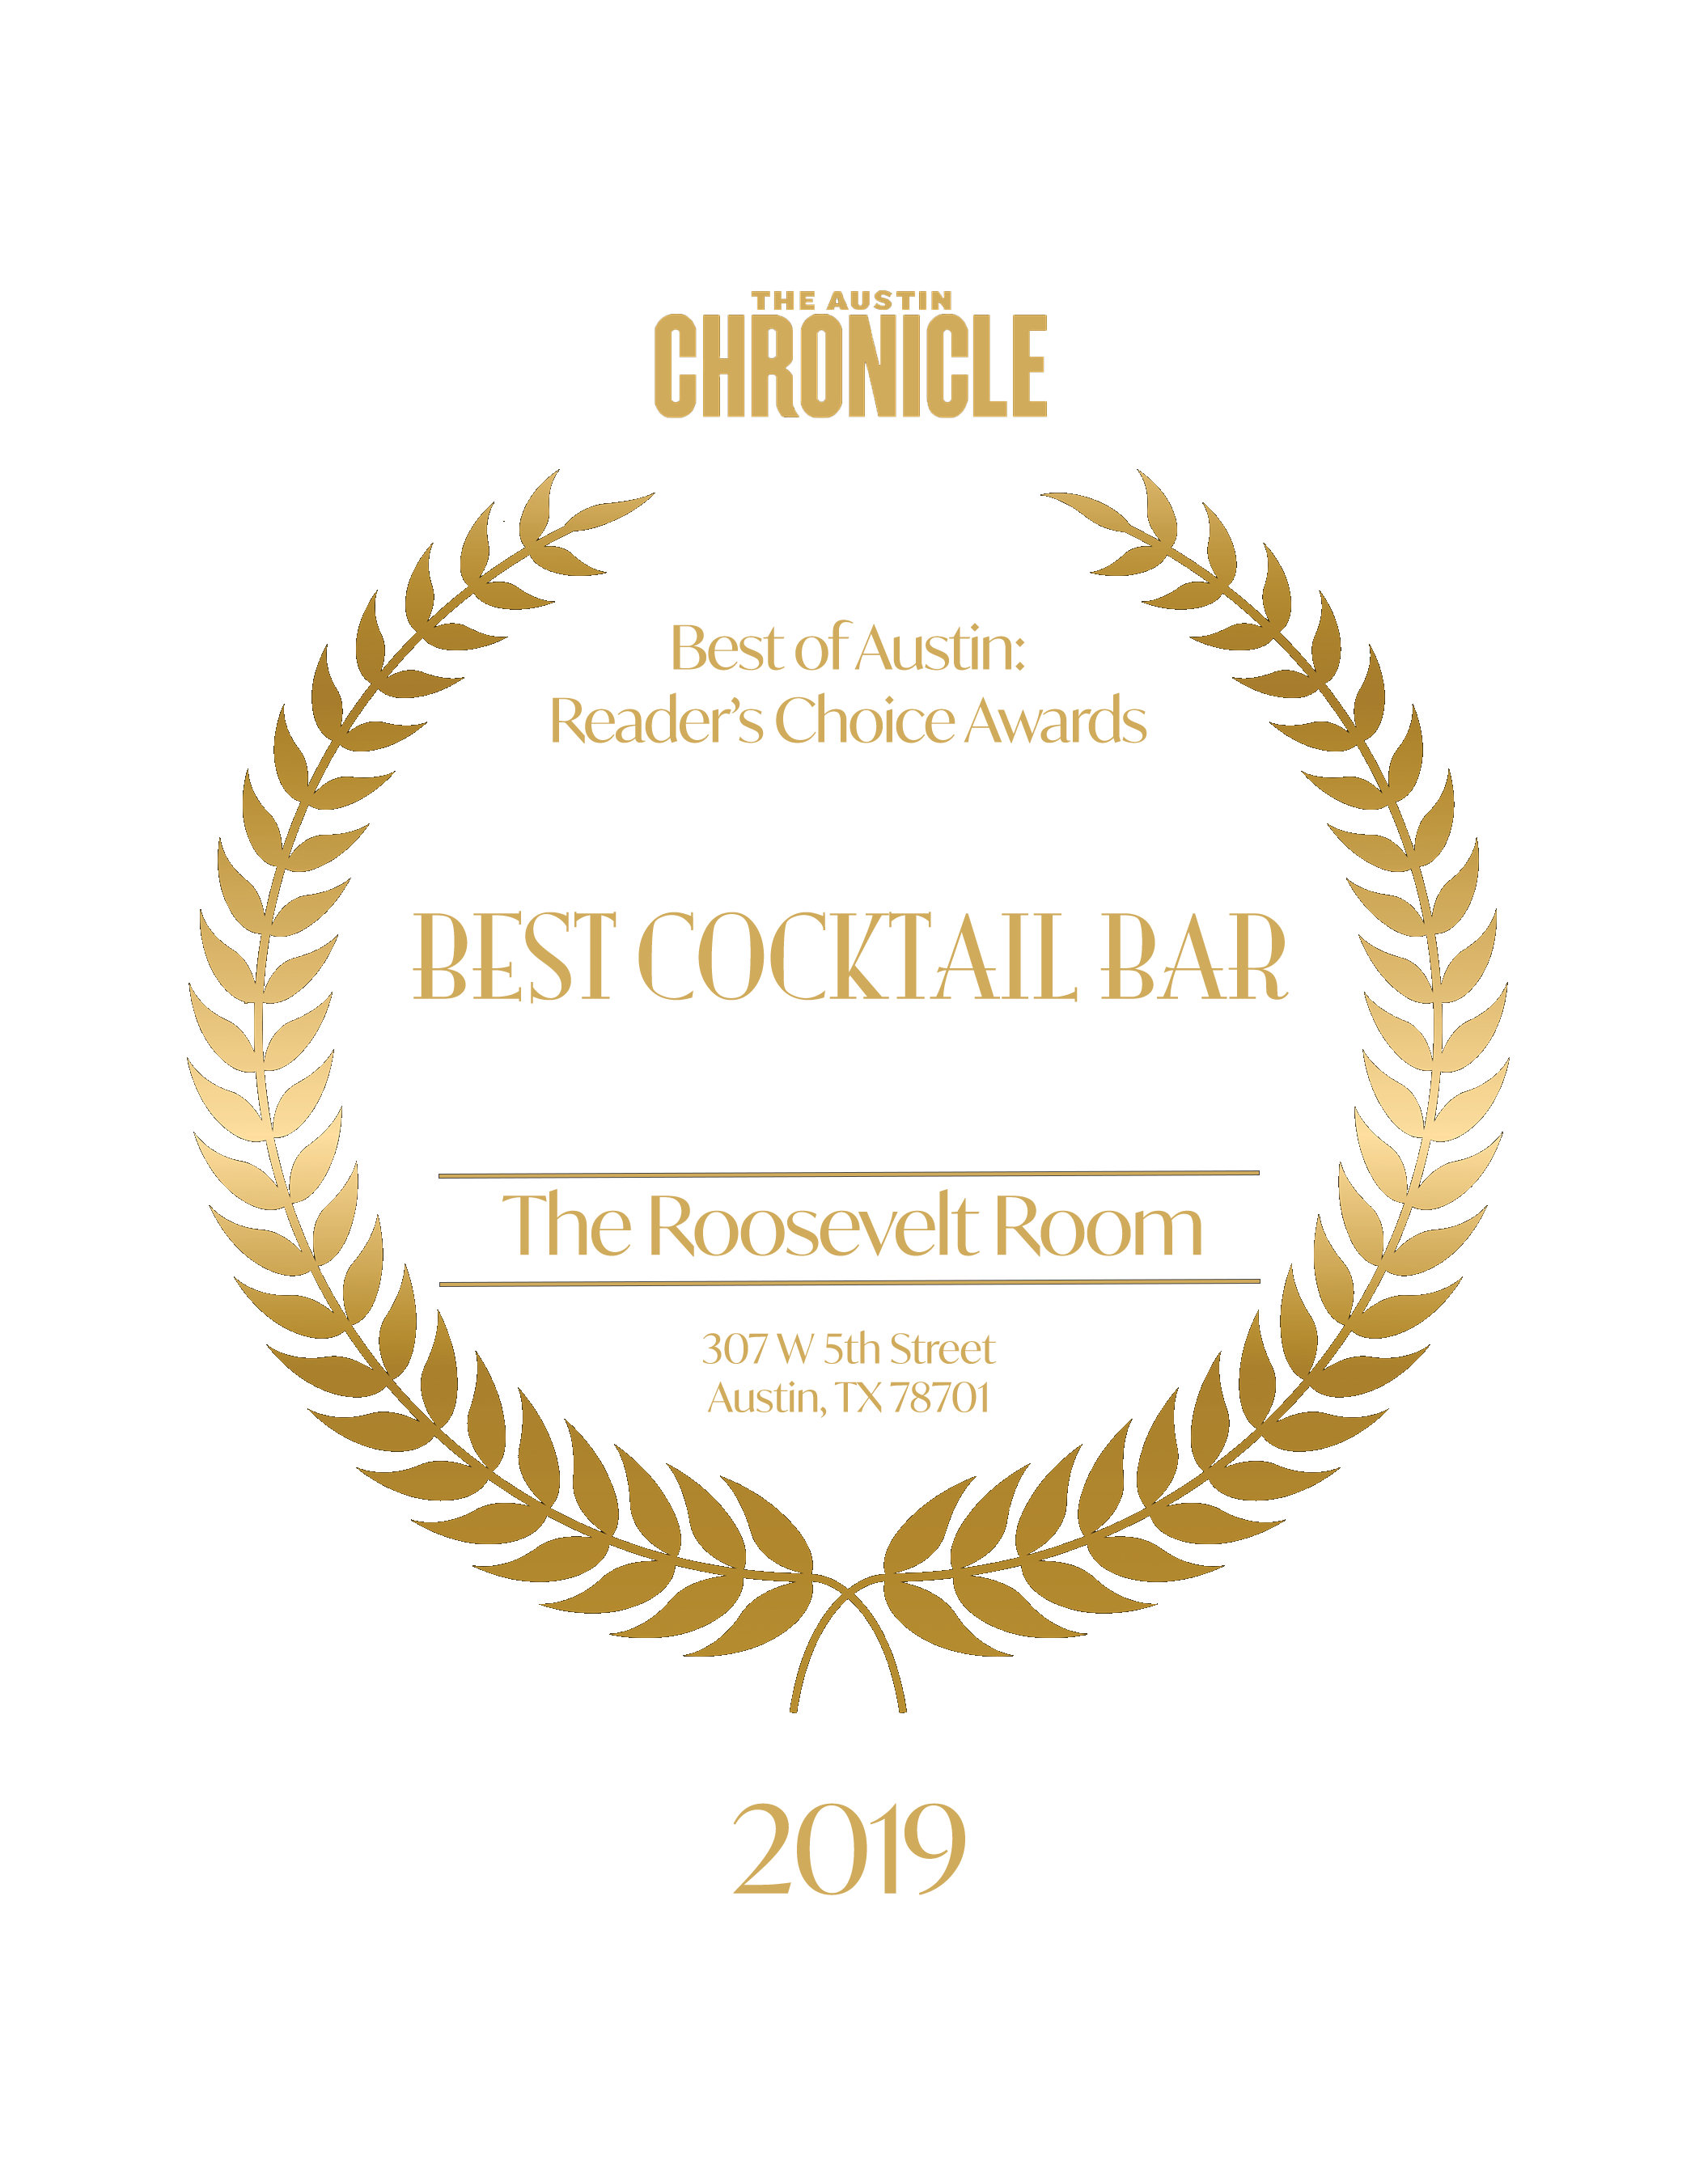 Austin Chronicle Best Cocktail Bar 2019 Plaque 7x9 (No Background).png